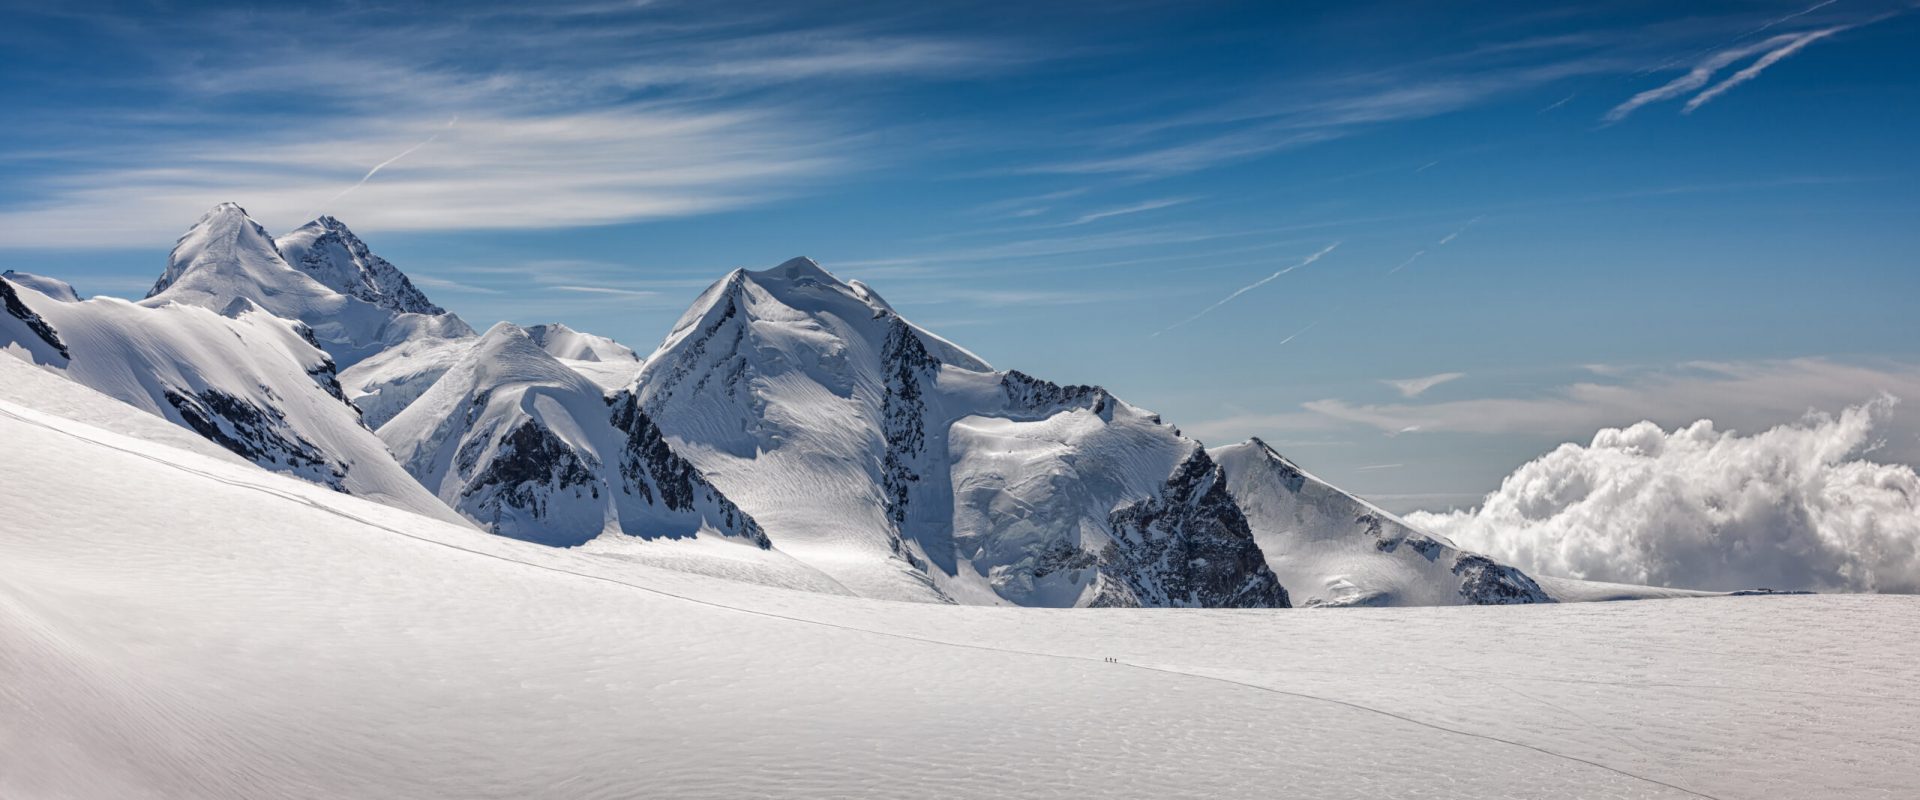 Panoramic View of Swiss Alps at Matterhorn Glacier Paradise, Zermatt, Switzerland.